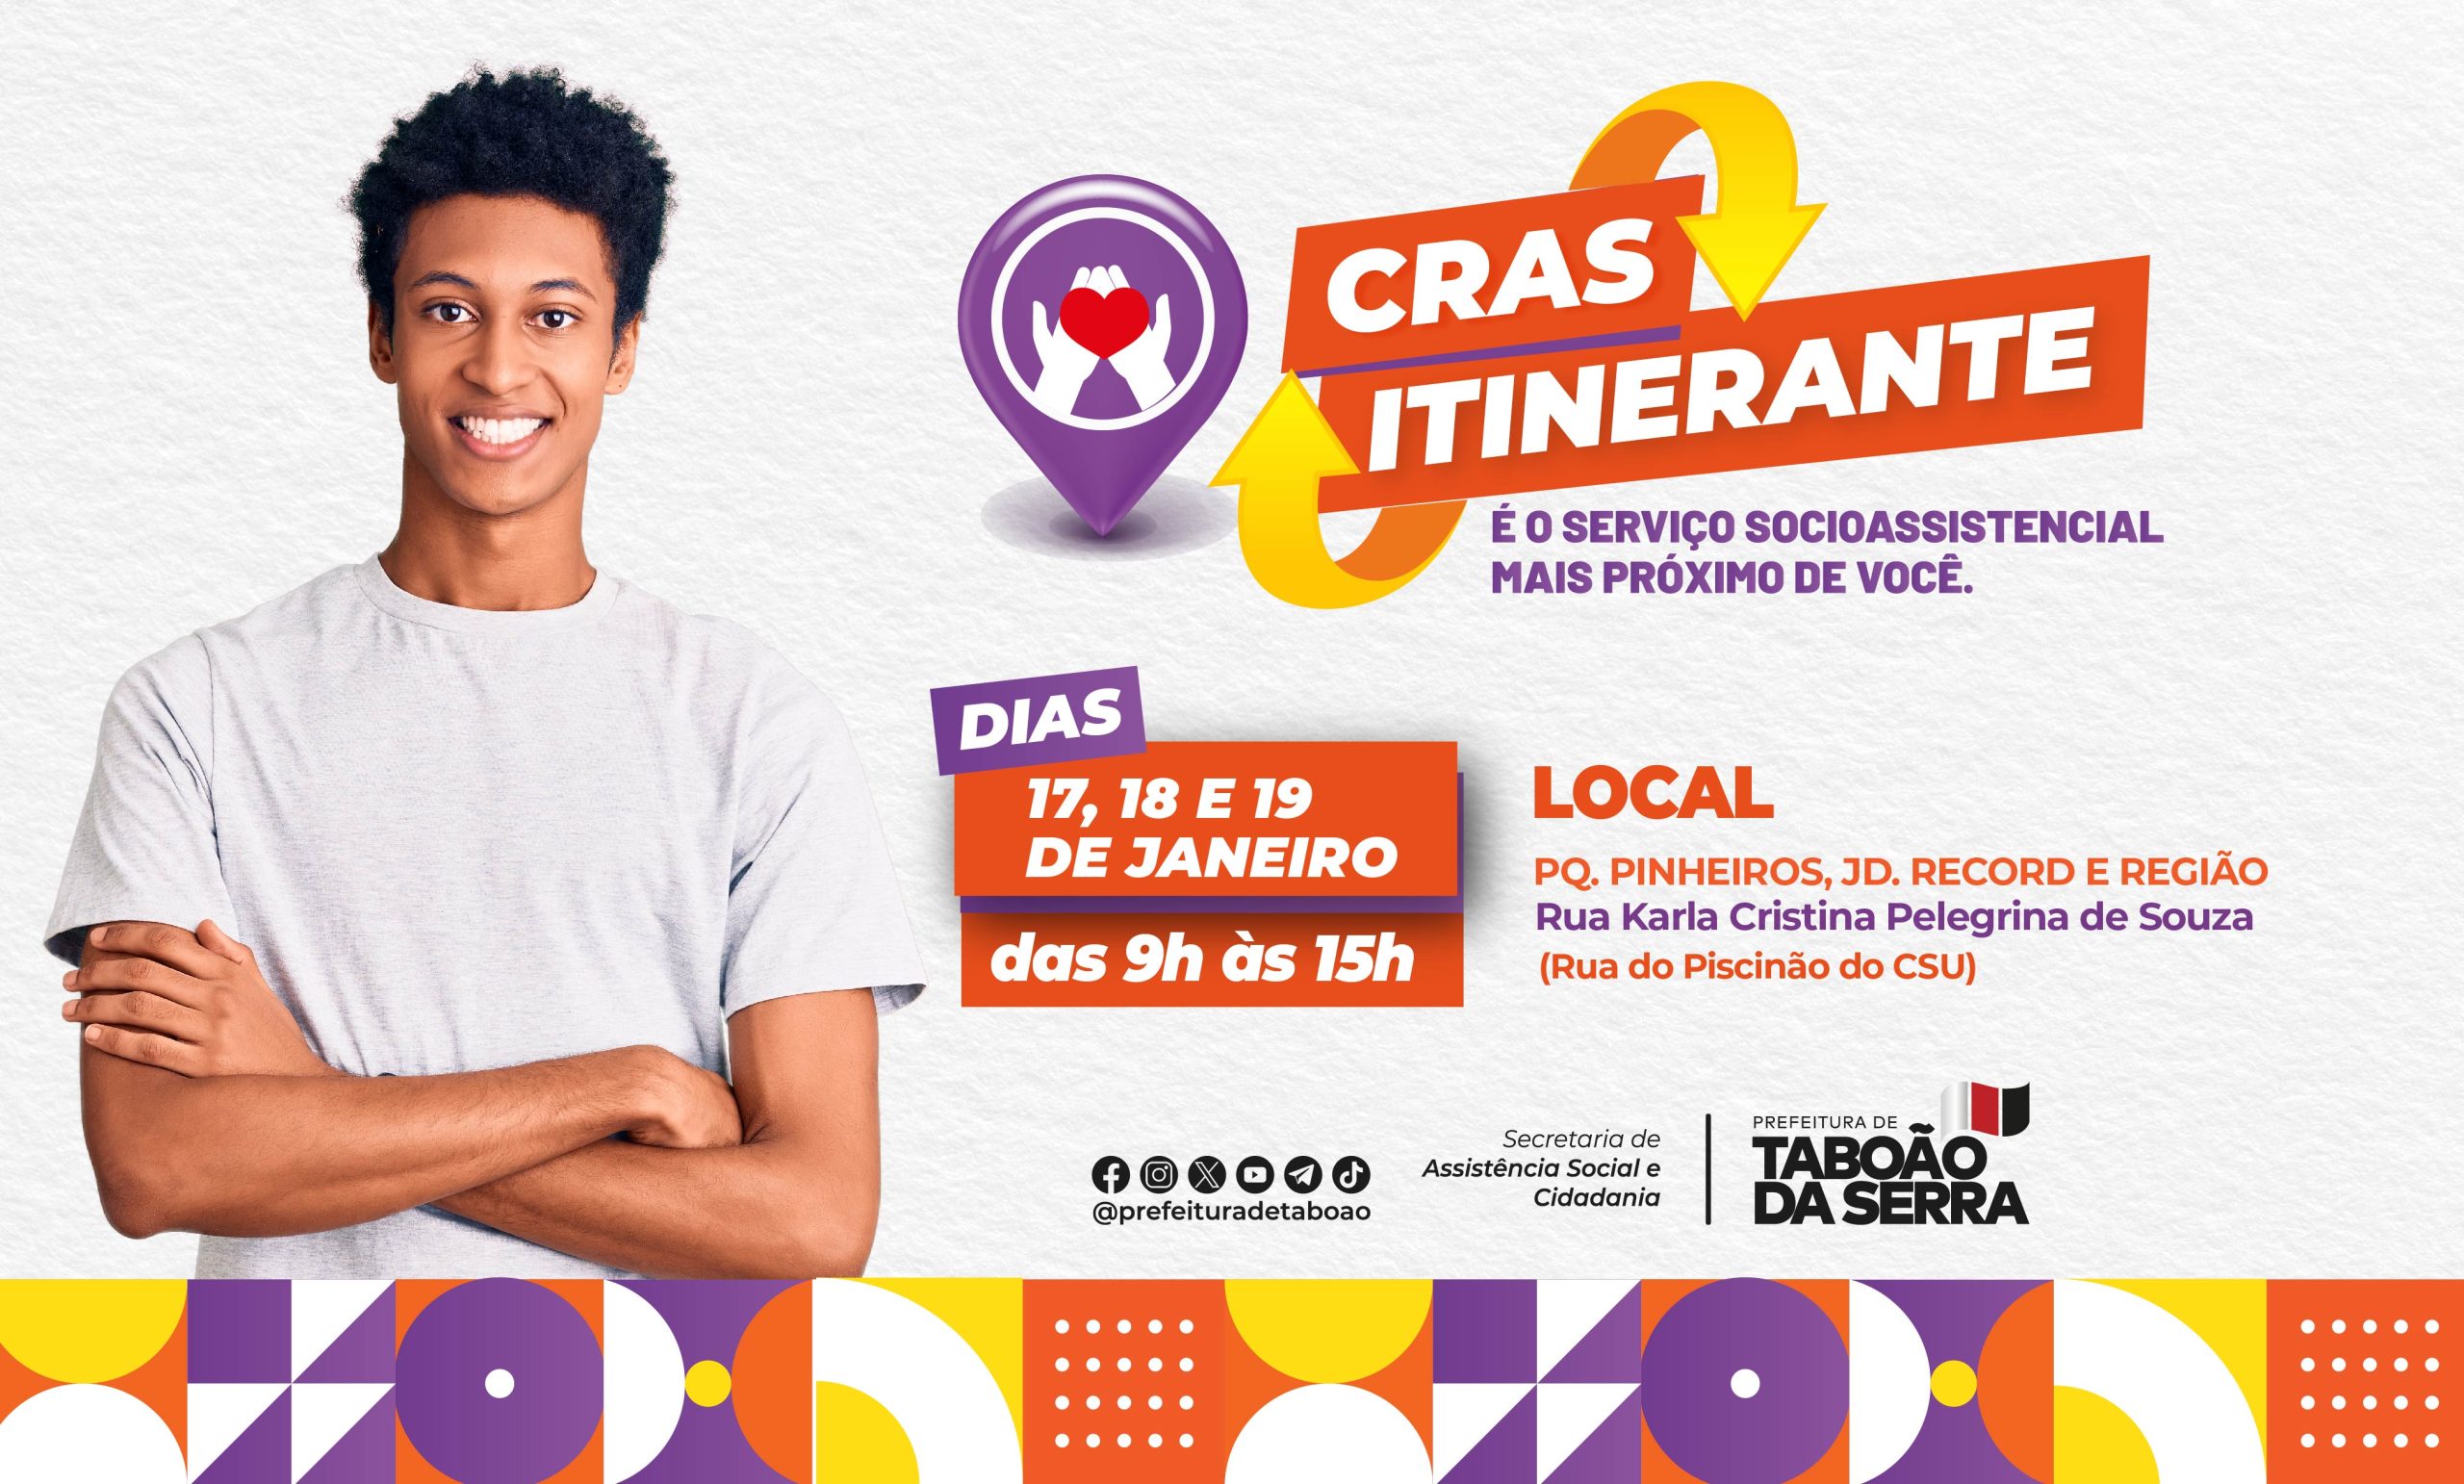 CRAS Itinerante estará nos dias 17 18 e 19 01 no Parque Pinheiros